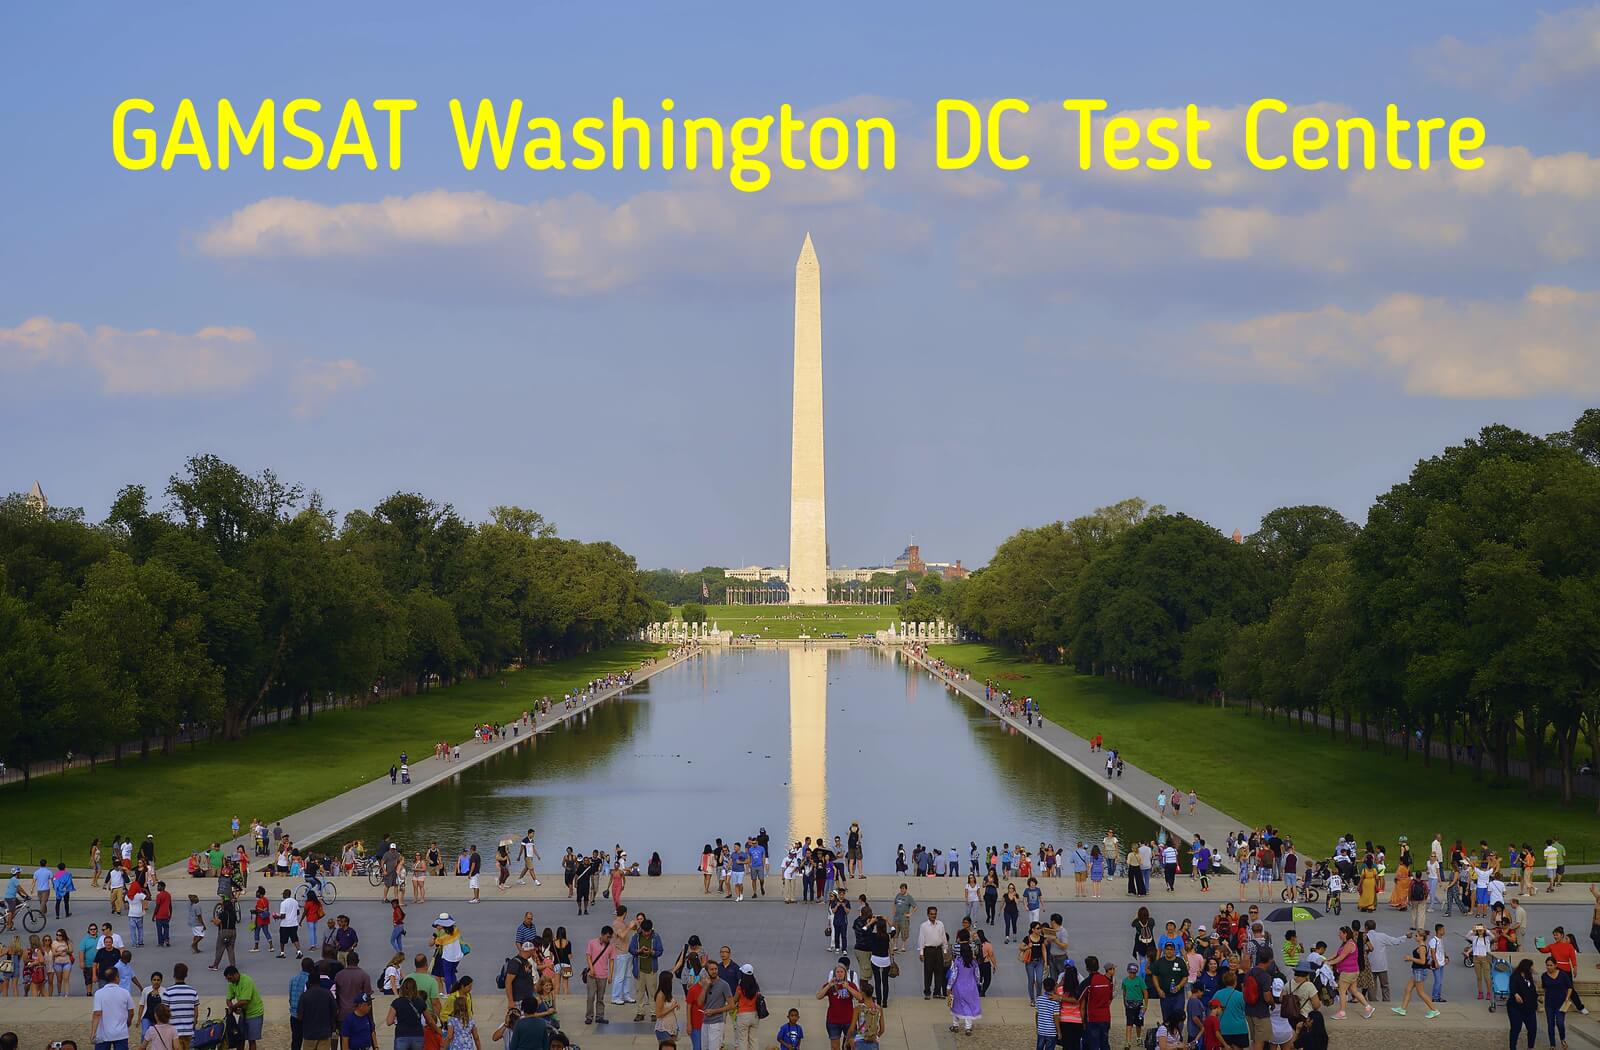 Where is GAMSAT held in Washington DC?